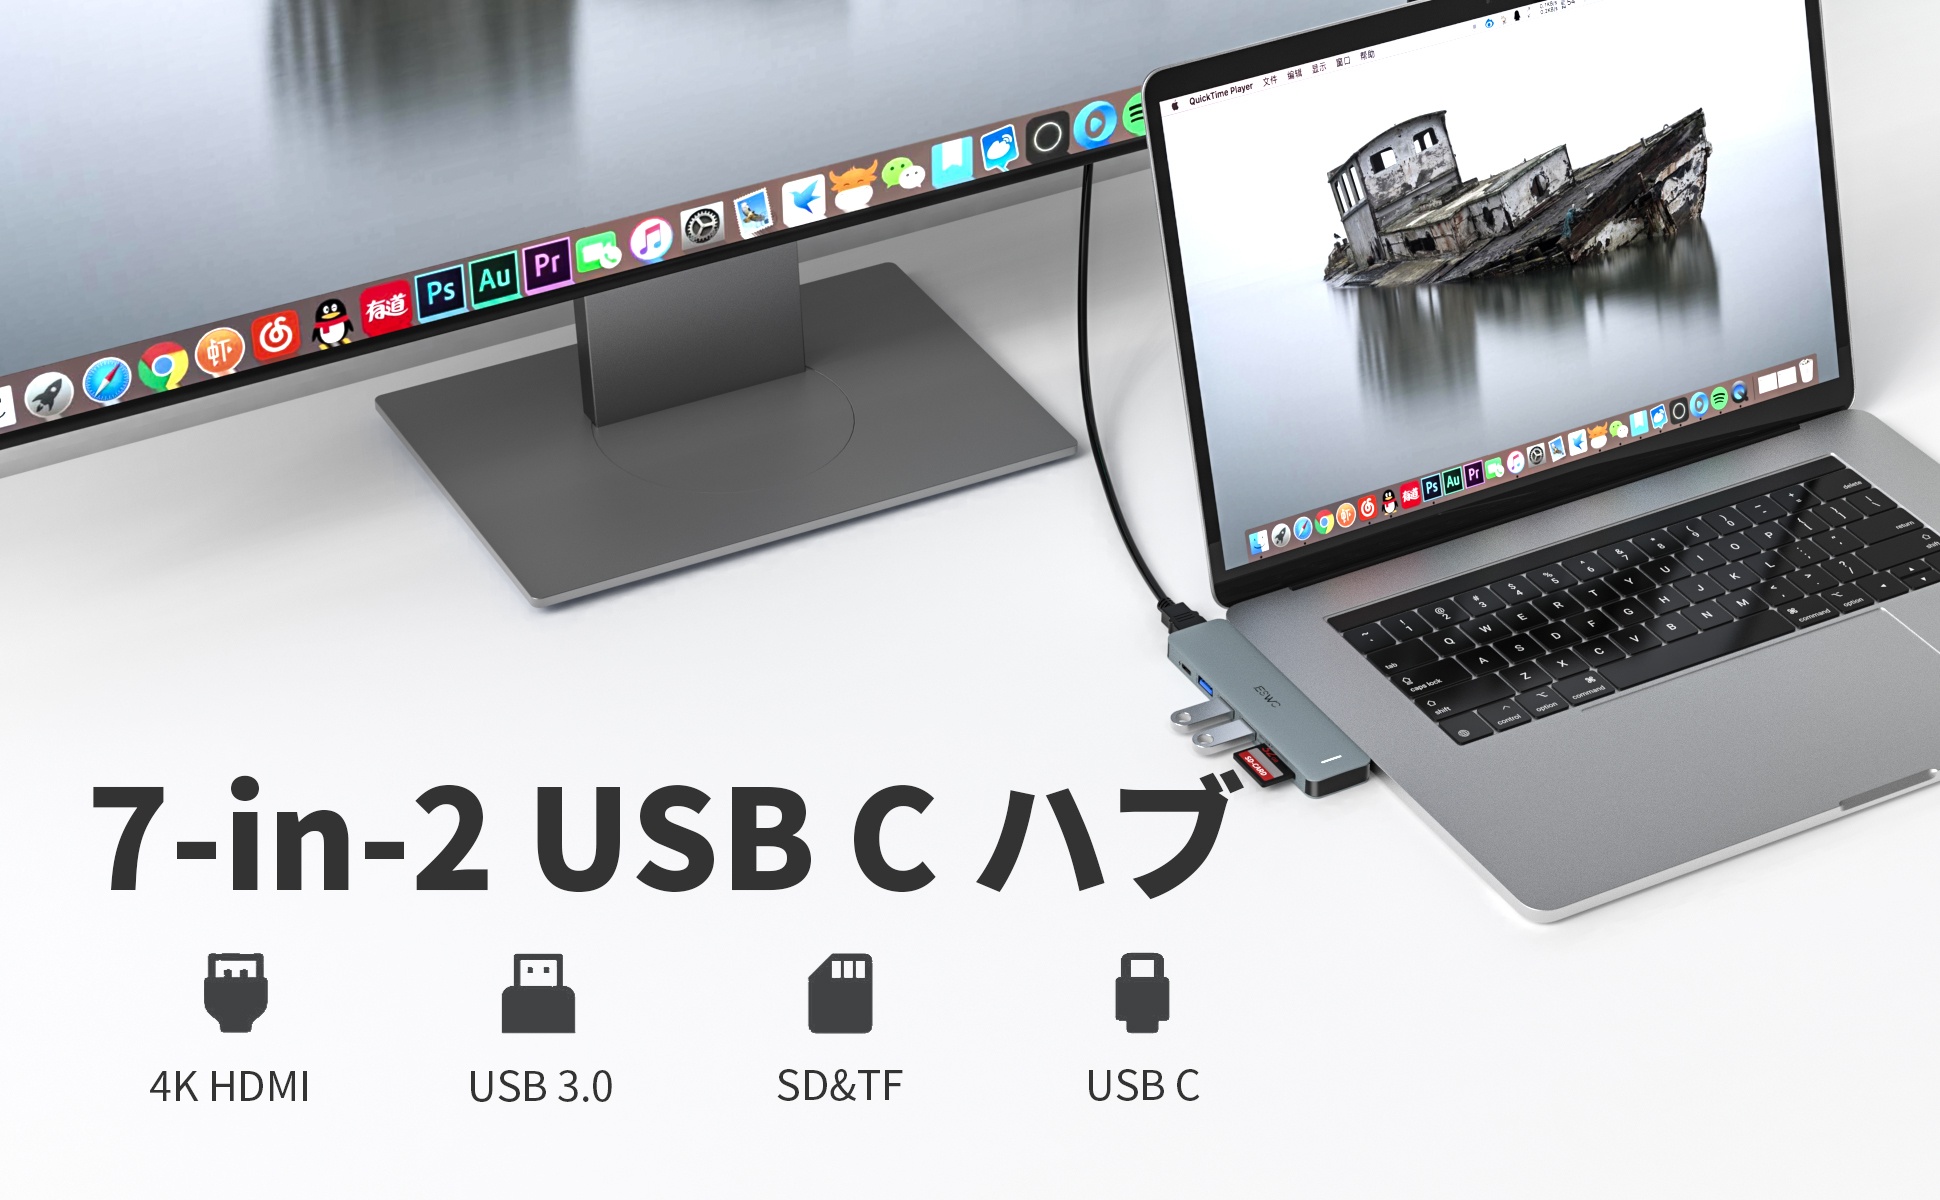 USB A HUB拓展器